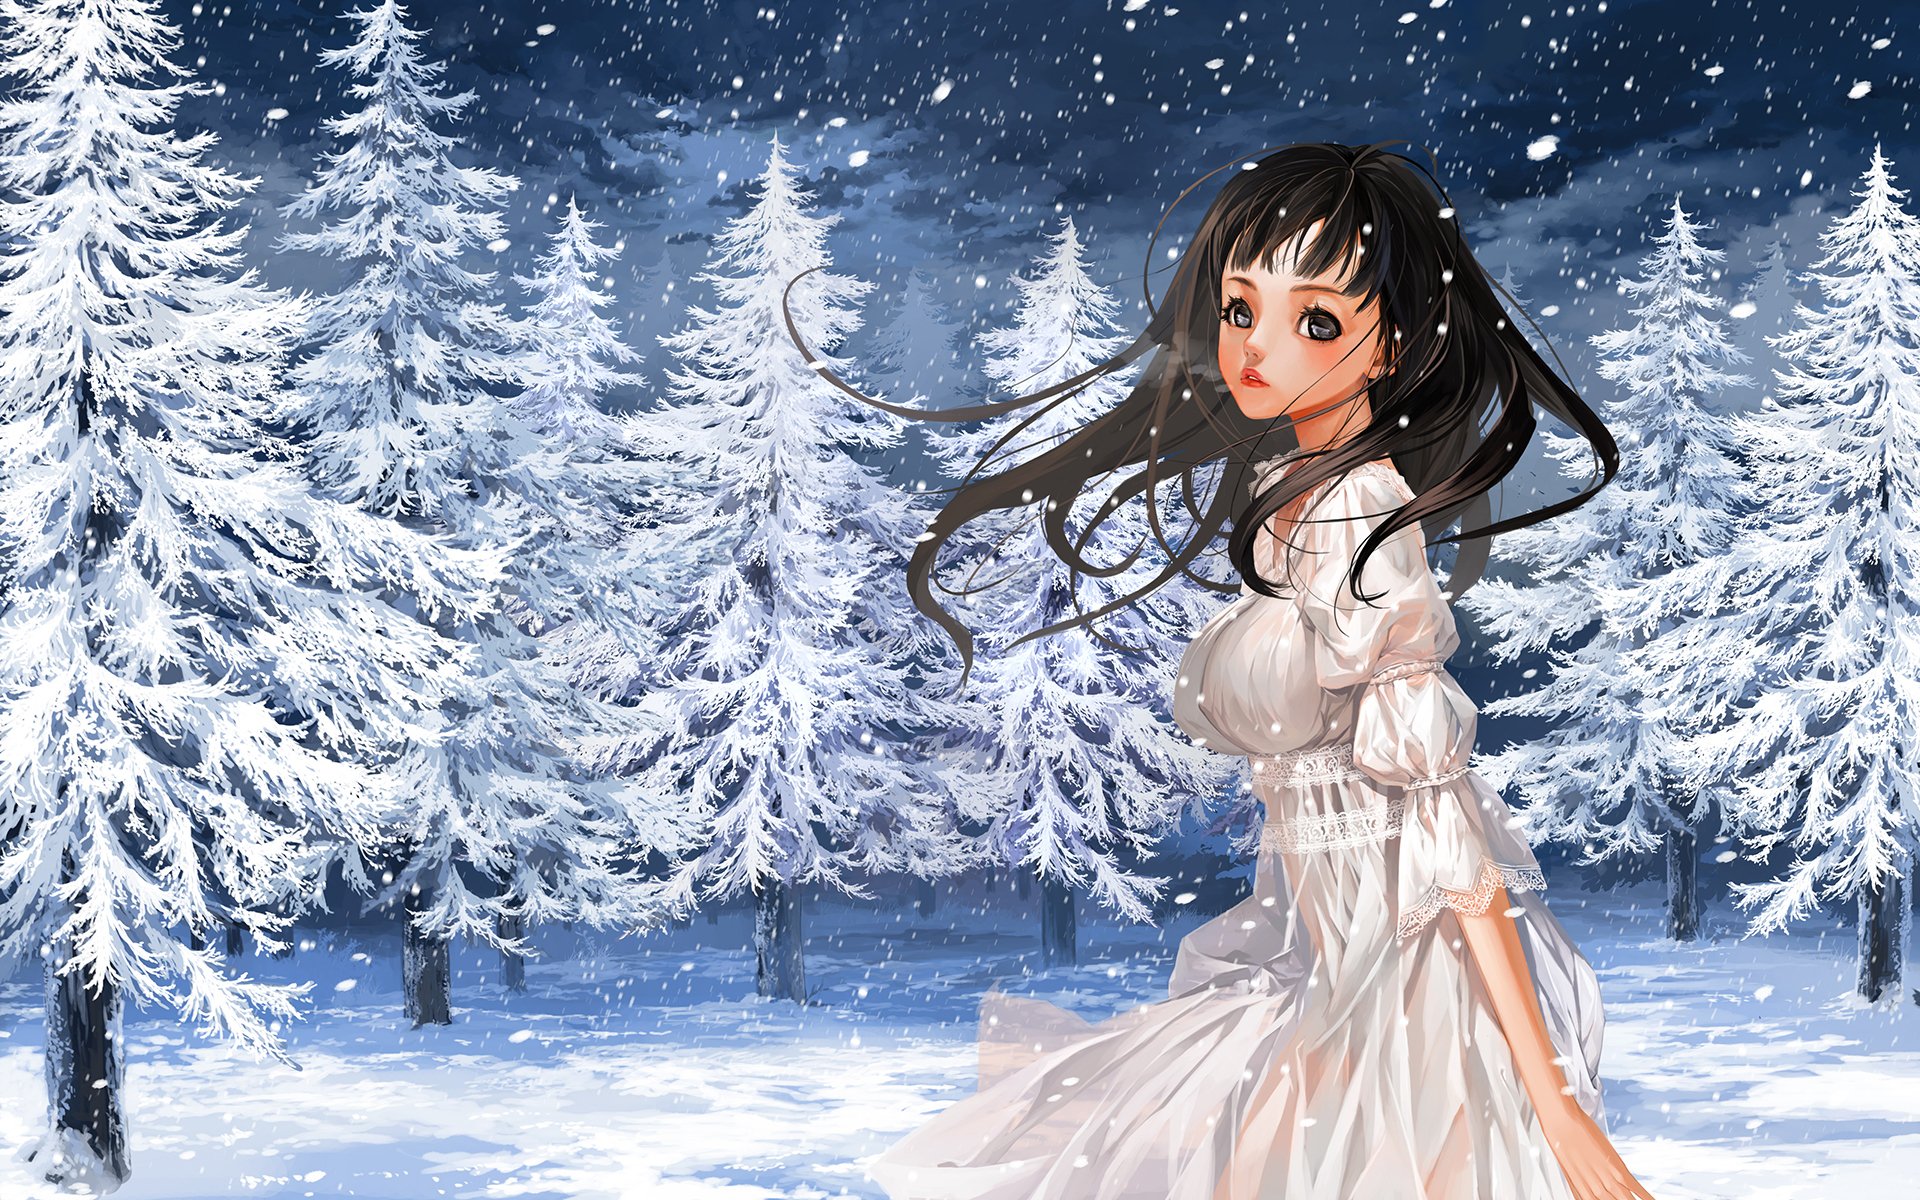 Anime Girl in Winter Forest HD Wallpaper